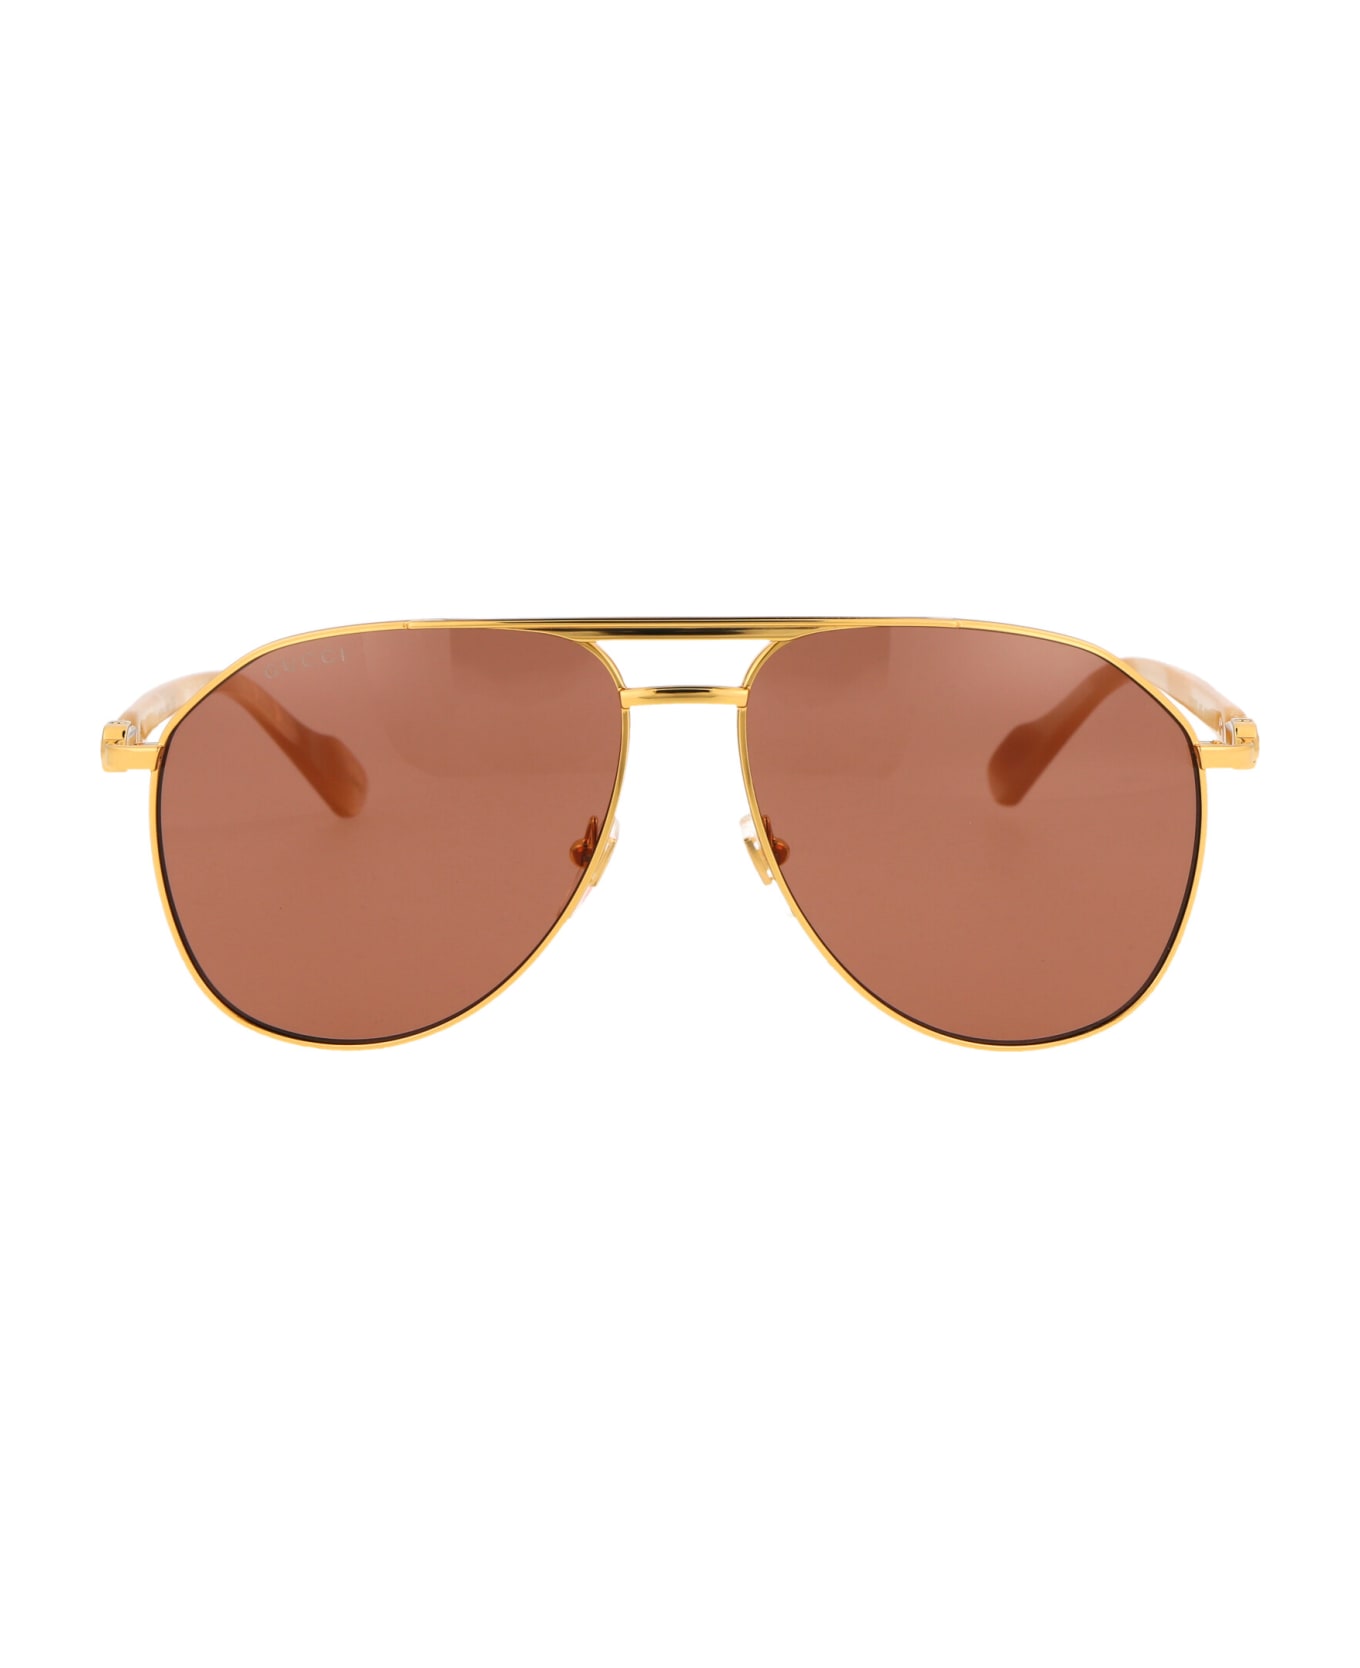 Gucci Eyewear Gg1220s Sunglasses - 003 GOLD GOLD BROWN